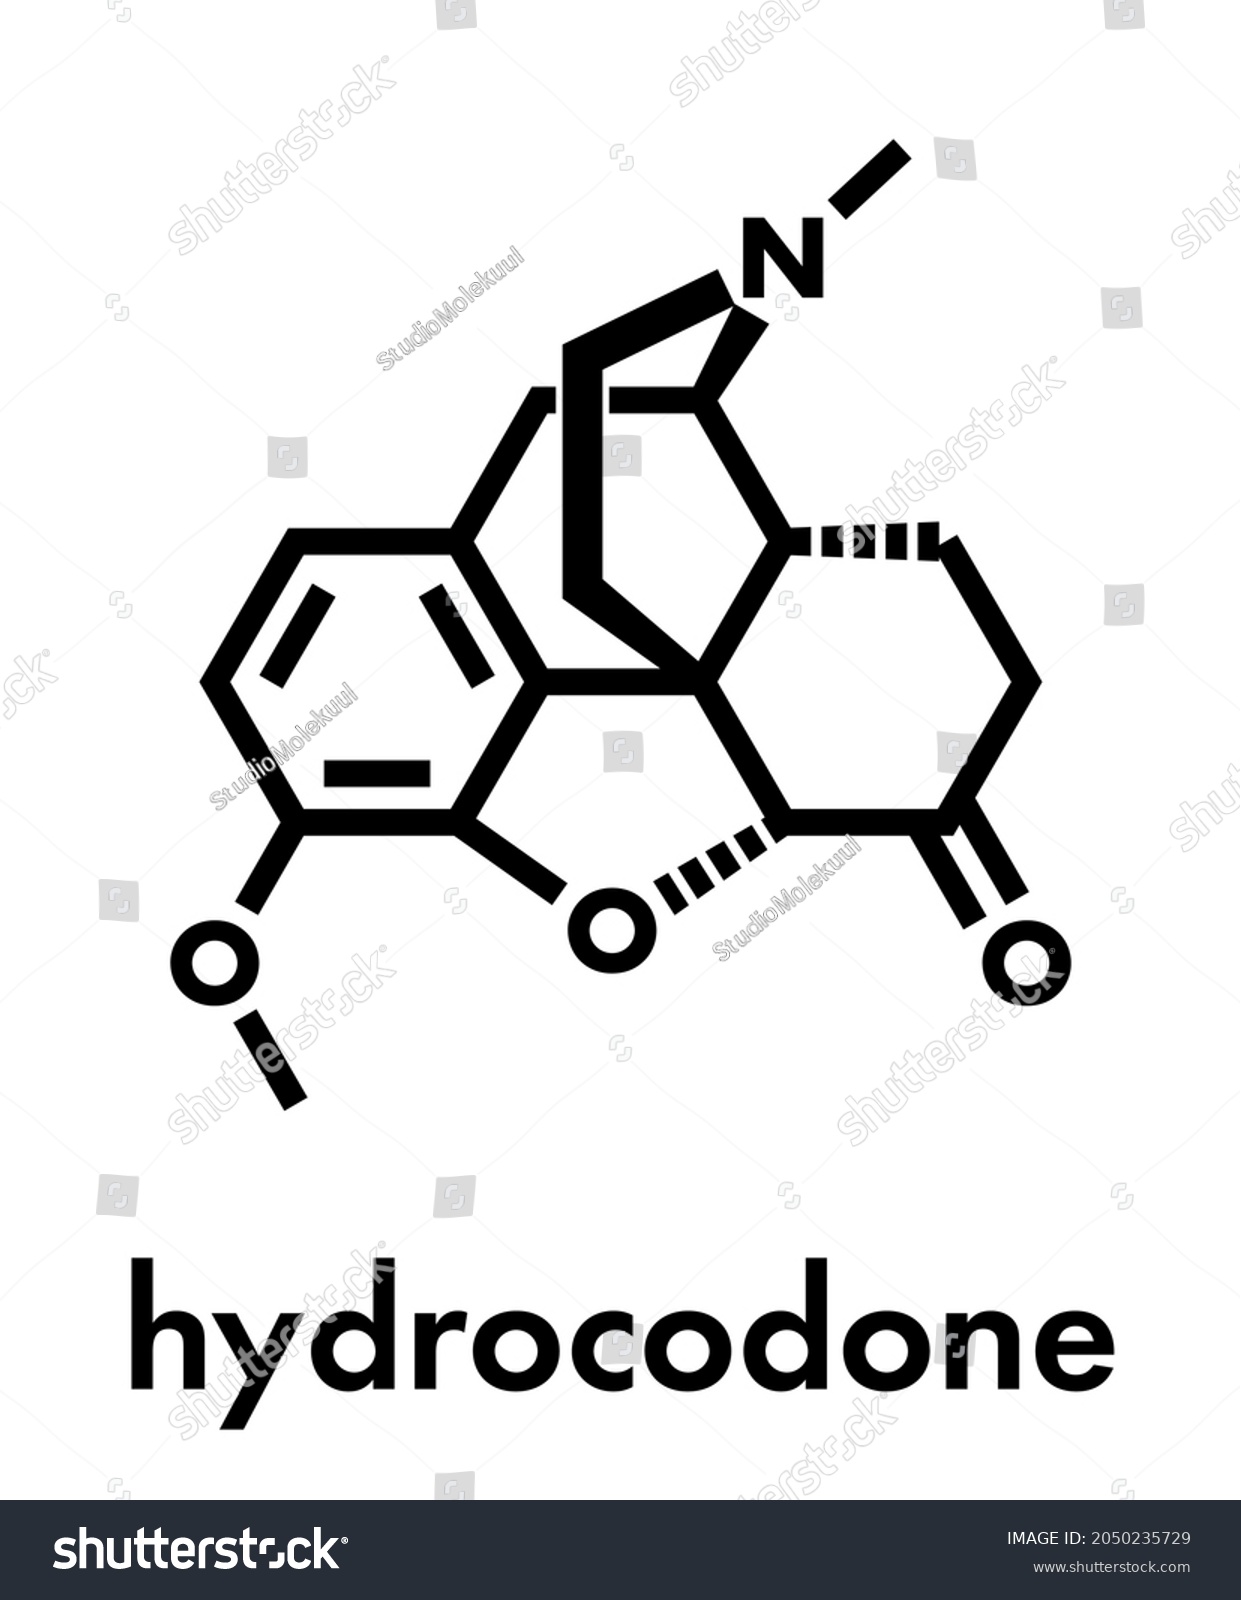 SVG of Hydrocodone narcotic analgesic drug molecule. Also used as cough medicine. Skeletal formula. svg